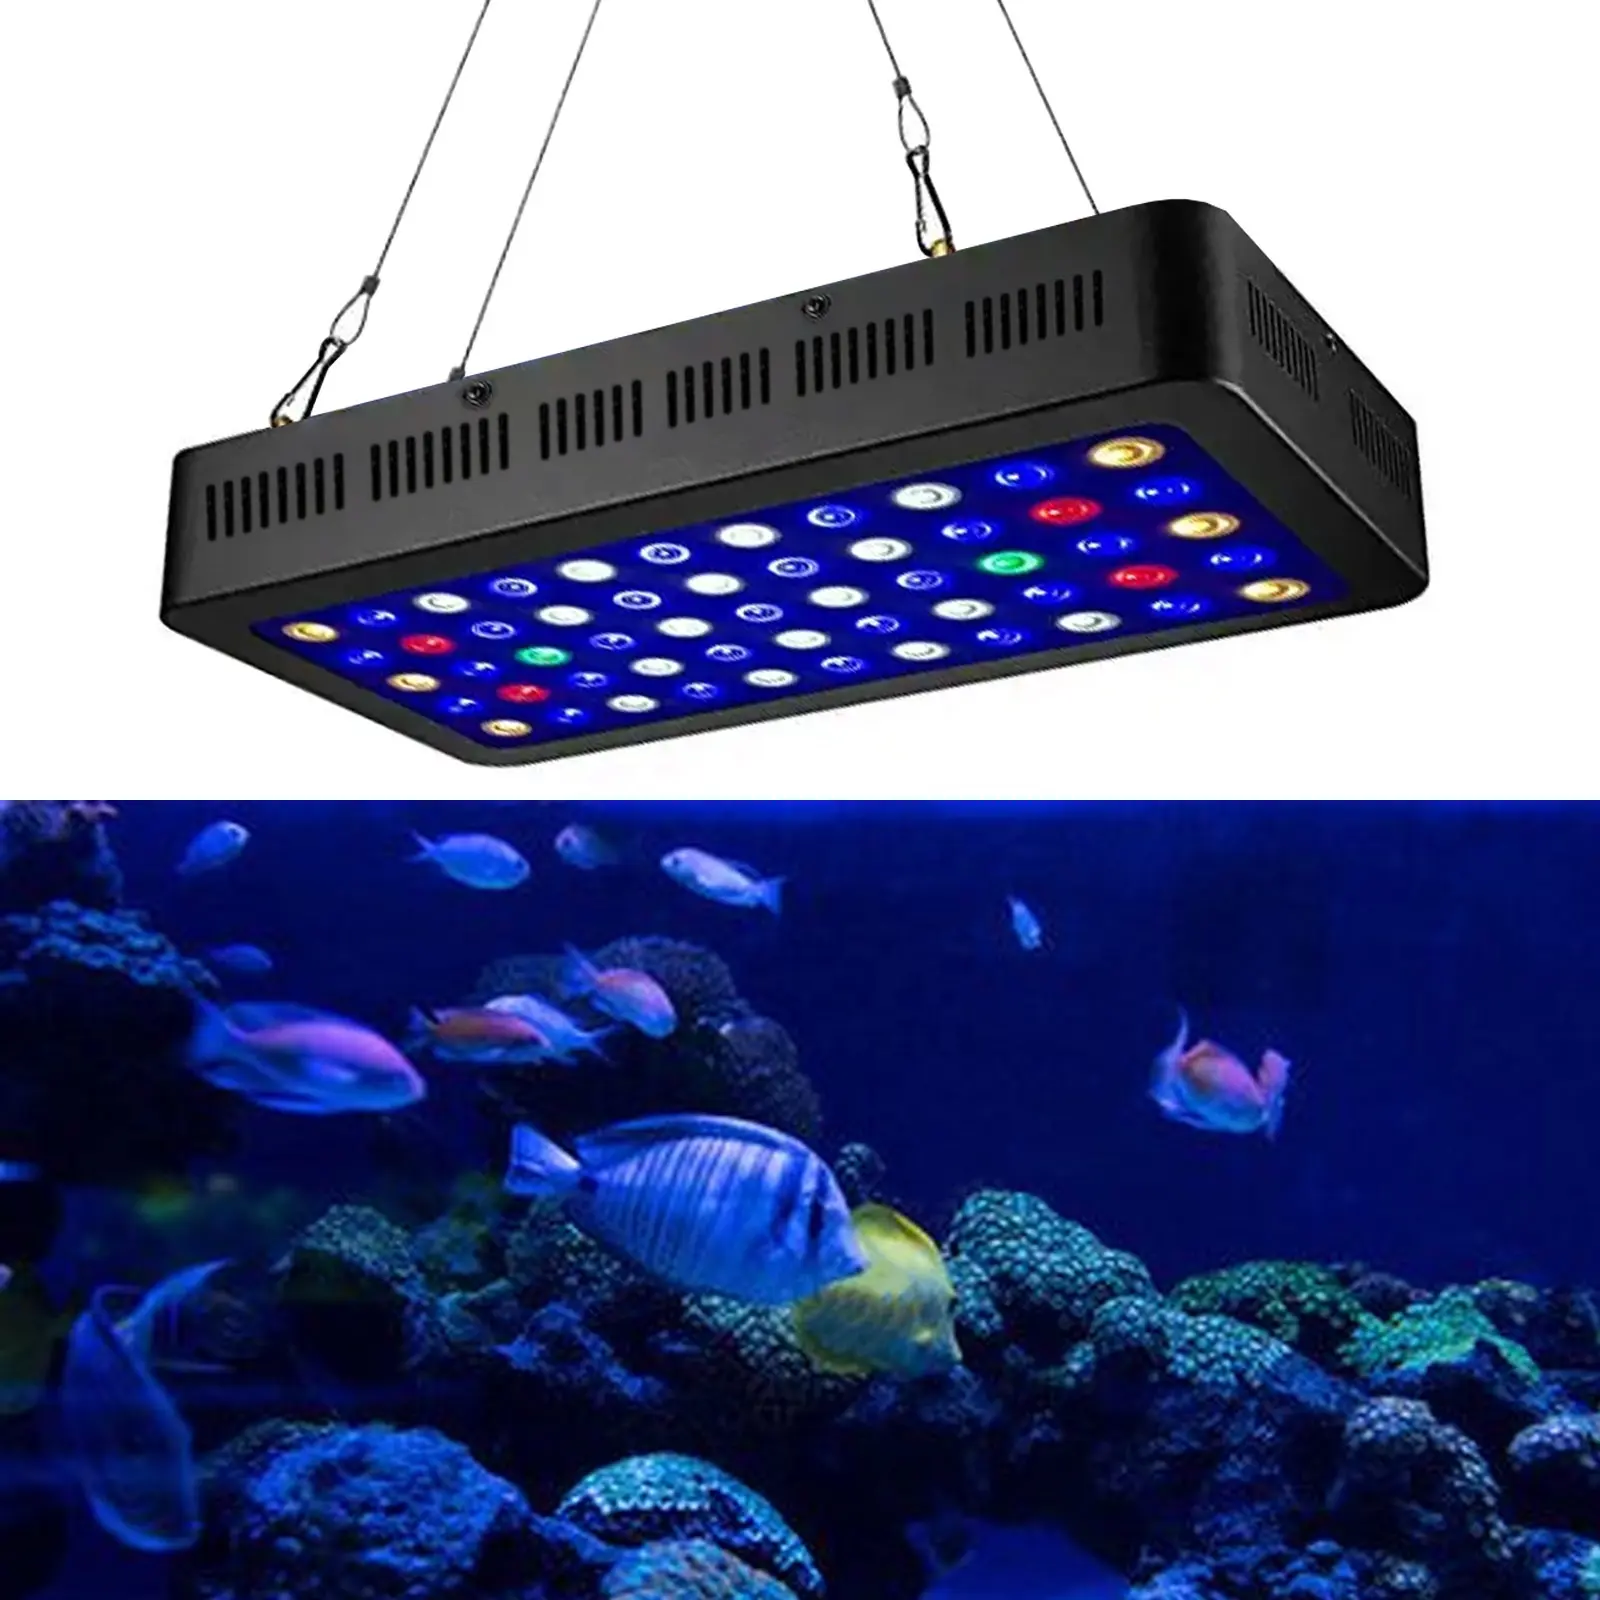 Liweida 2 dim&2 switches full spectrum panel wrgb led aquarium lights 3w*55pcs sheet metal salt and water lamp for marine coral